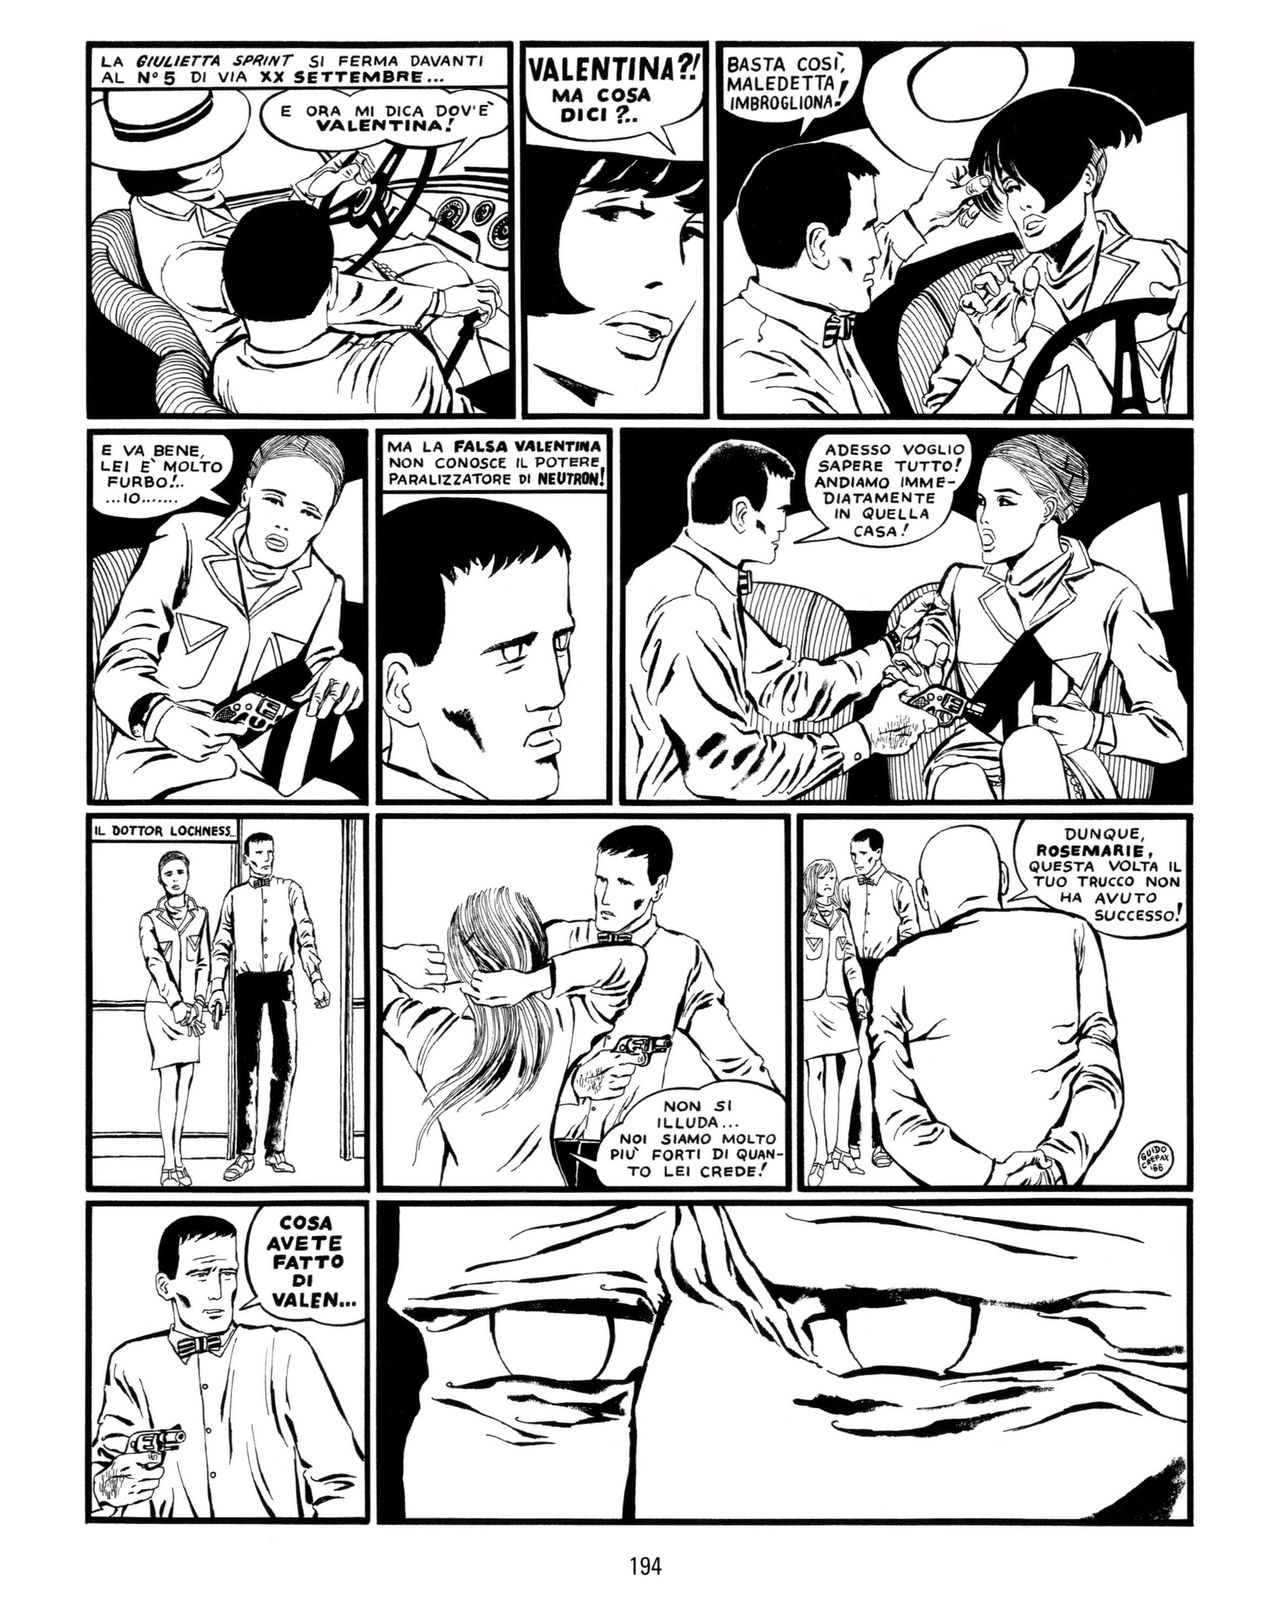 [Guido Crepax] Erotica Fumetti #25 : L'ascesa dei sotterranei : I cavalieri ciechi [Italian] 195